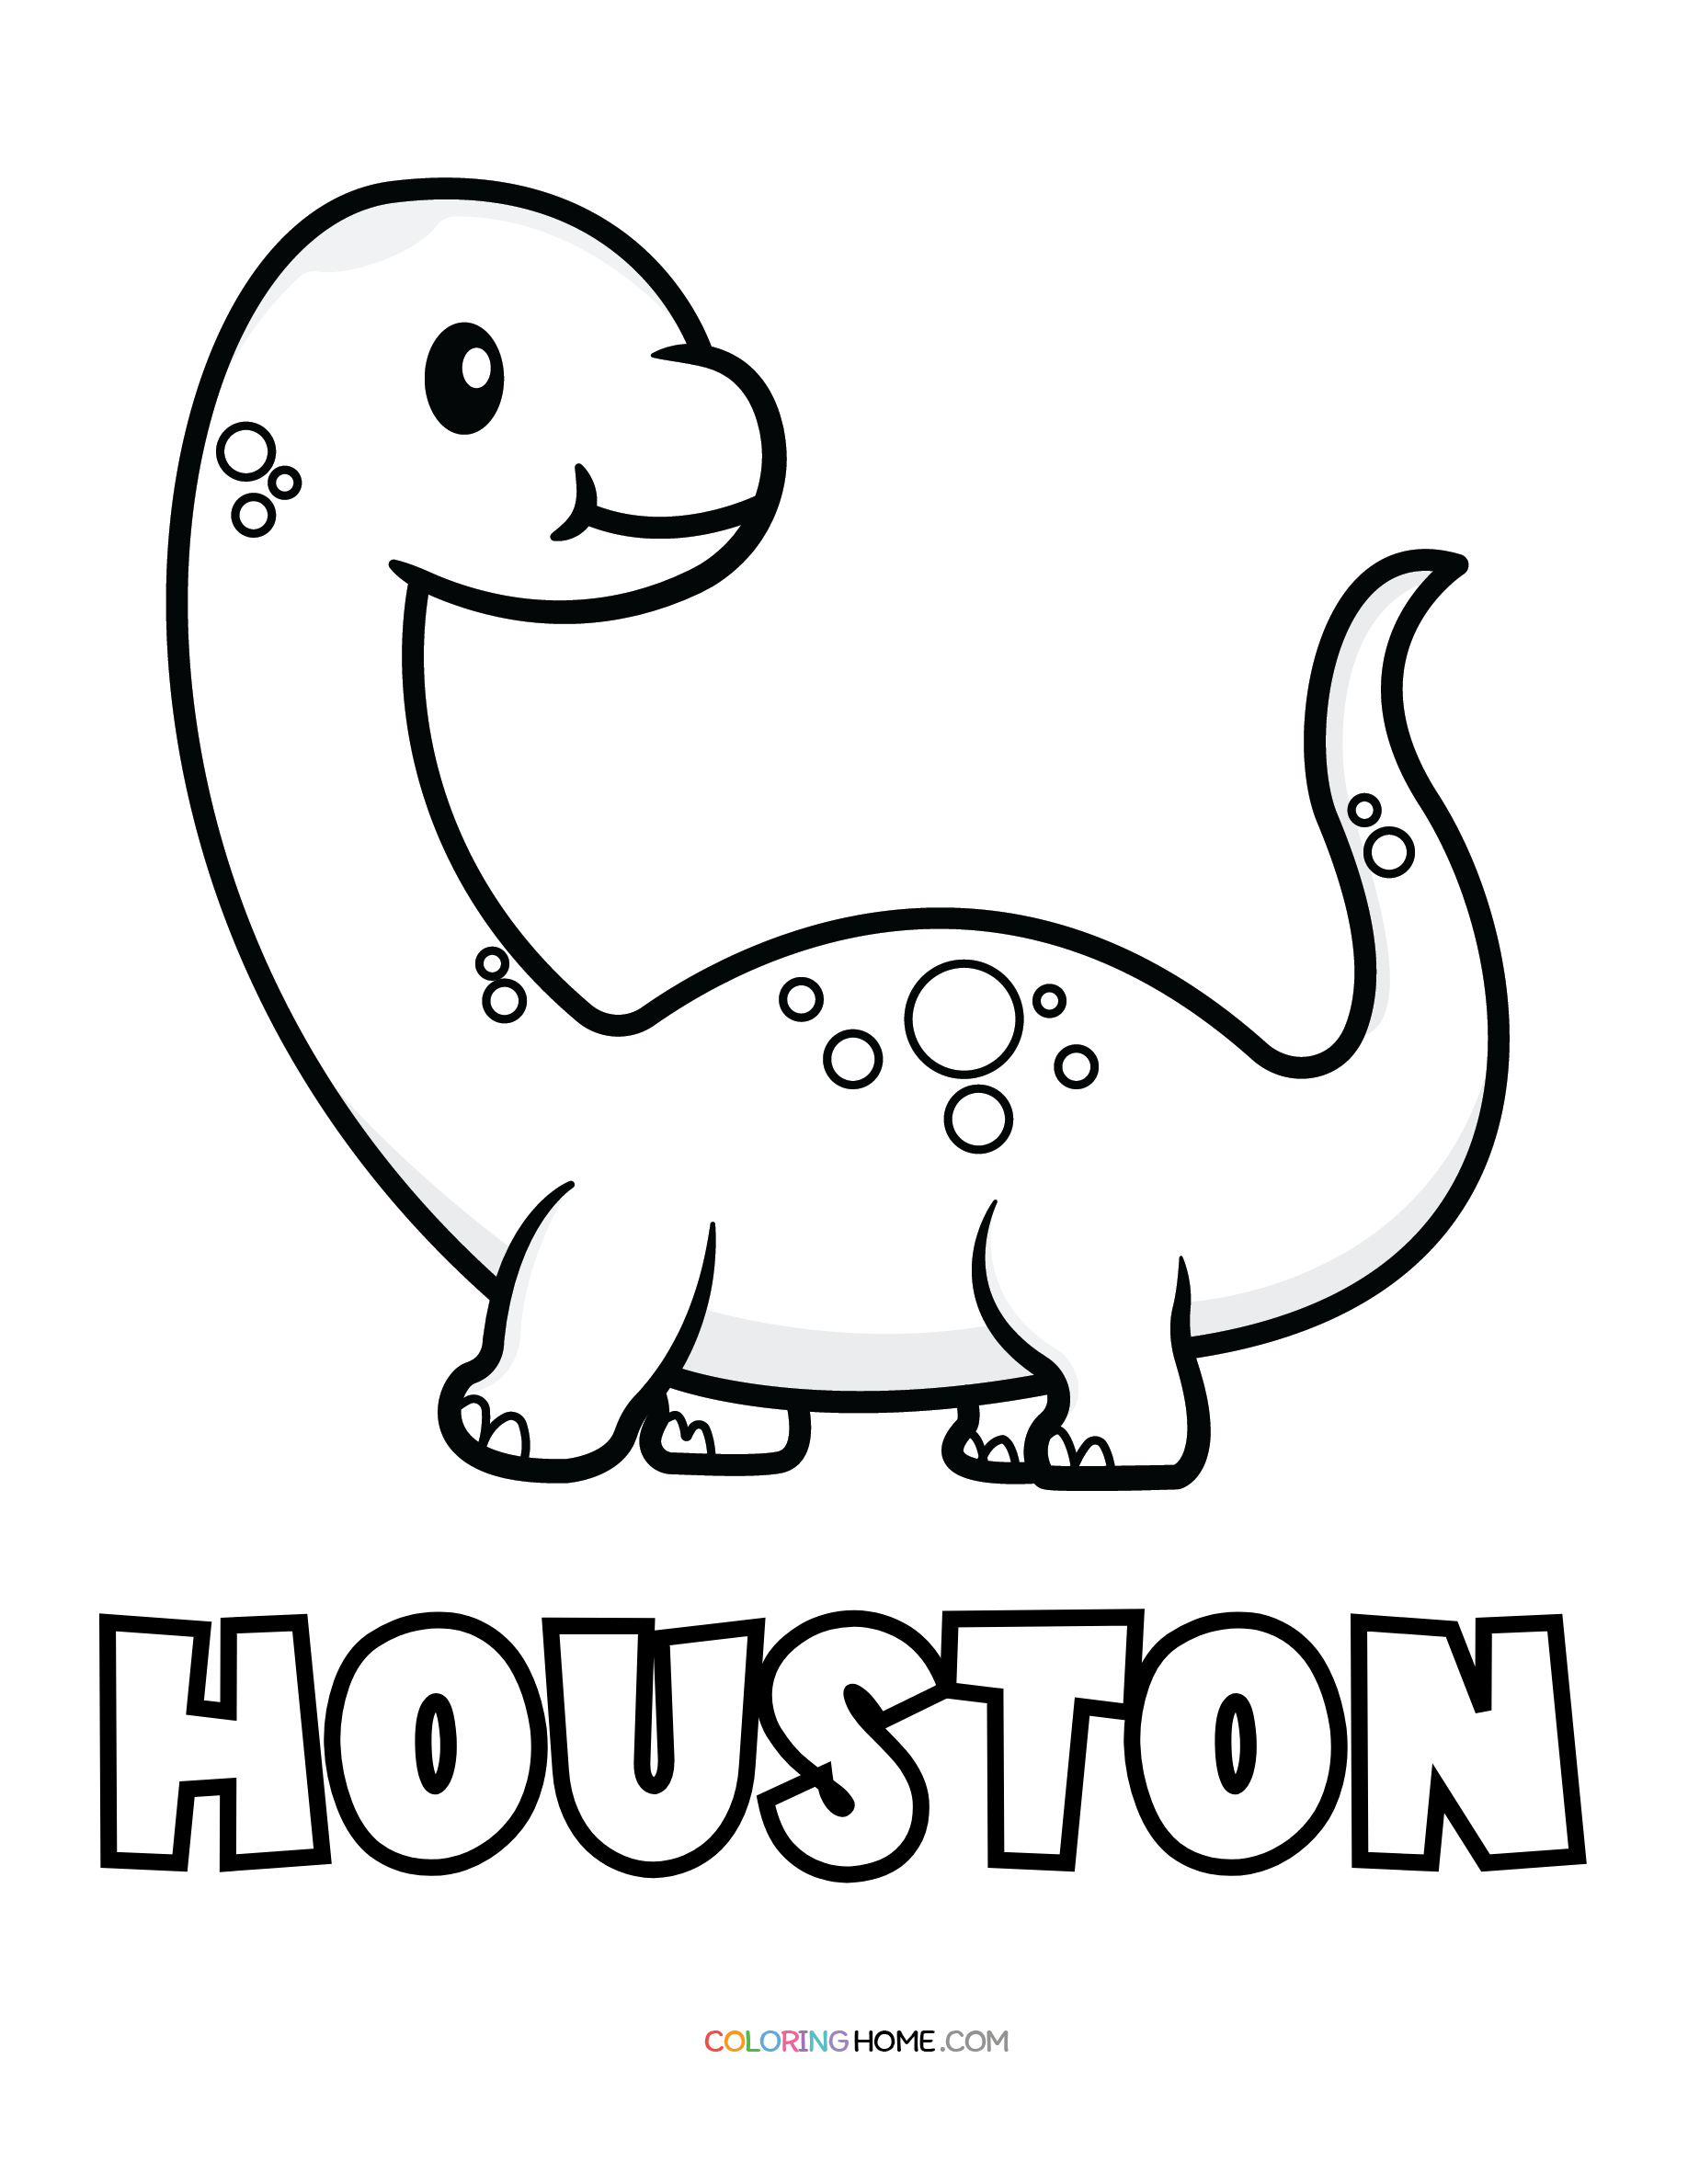 Houston dinosaur coloring page